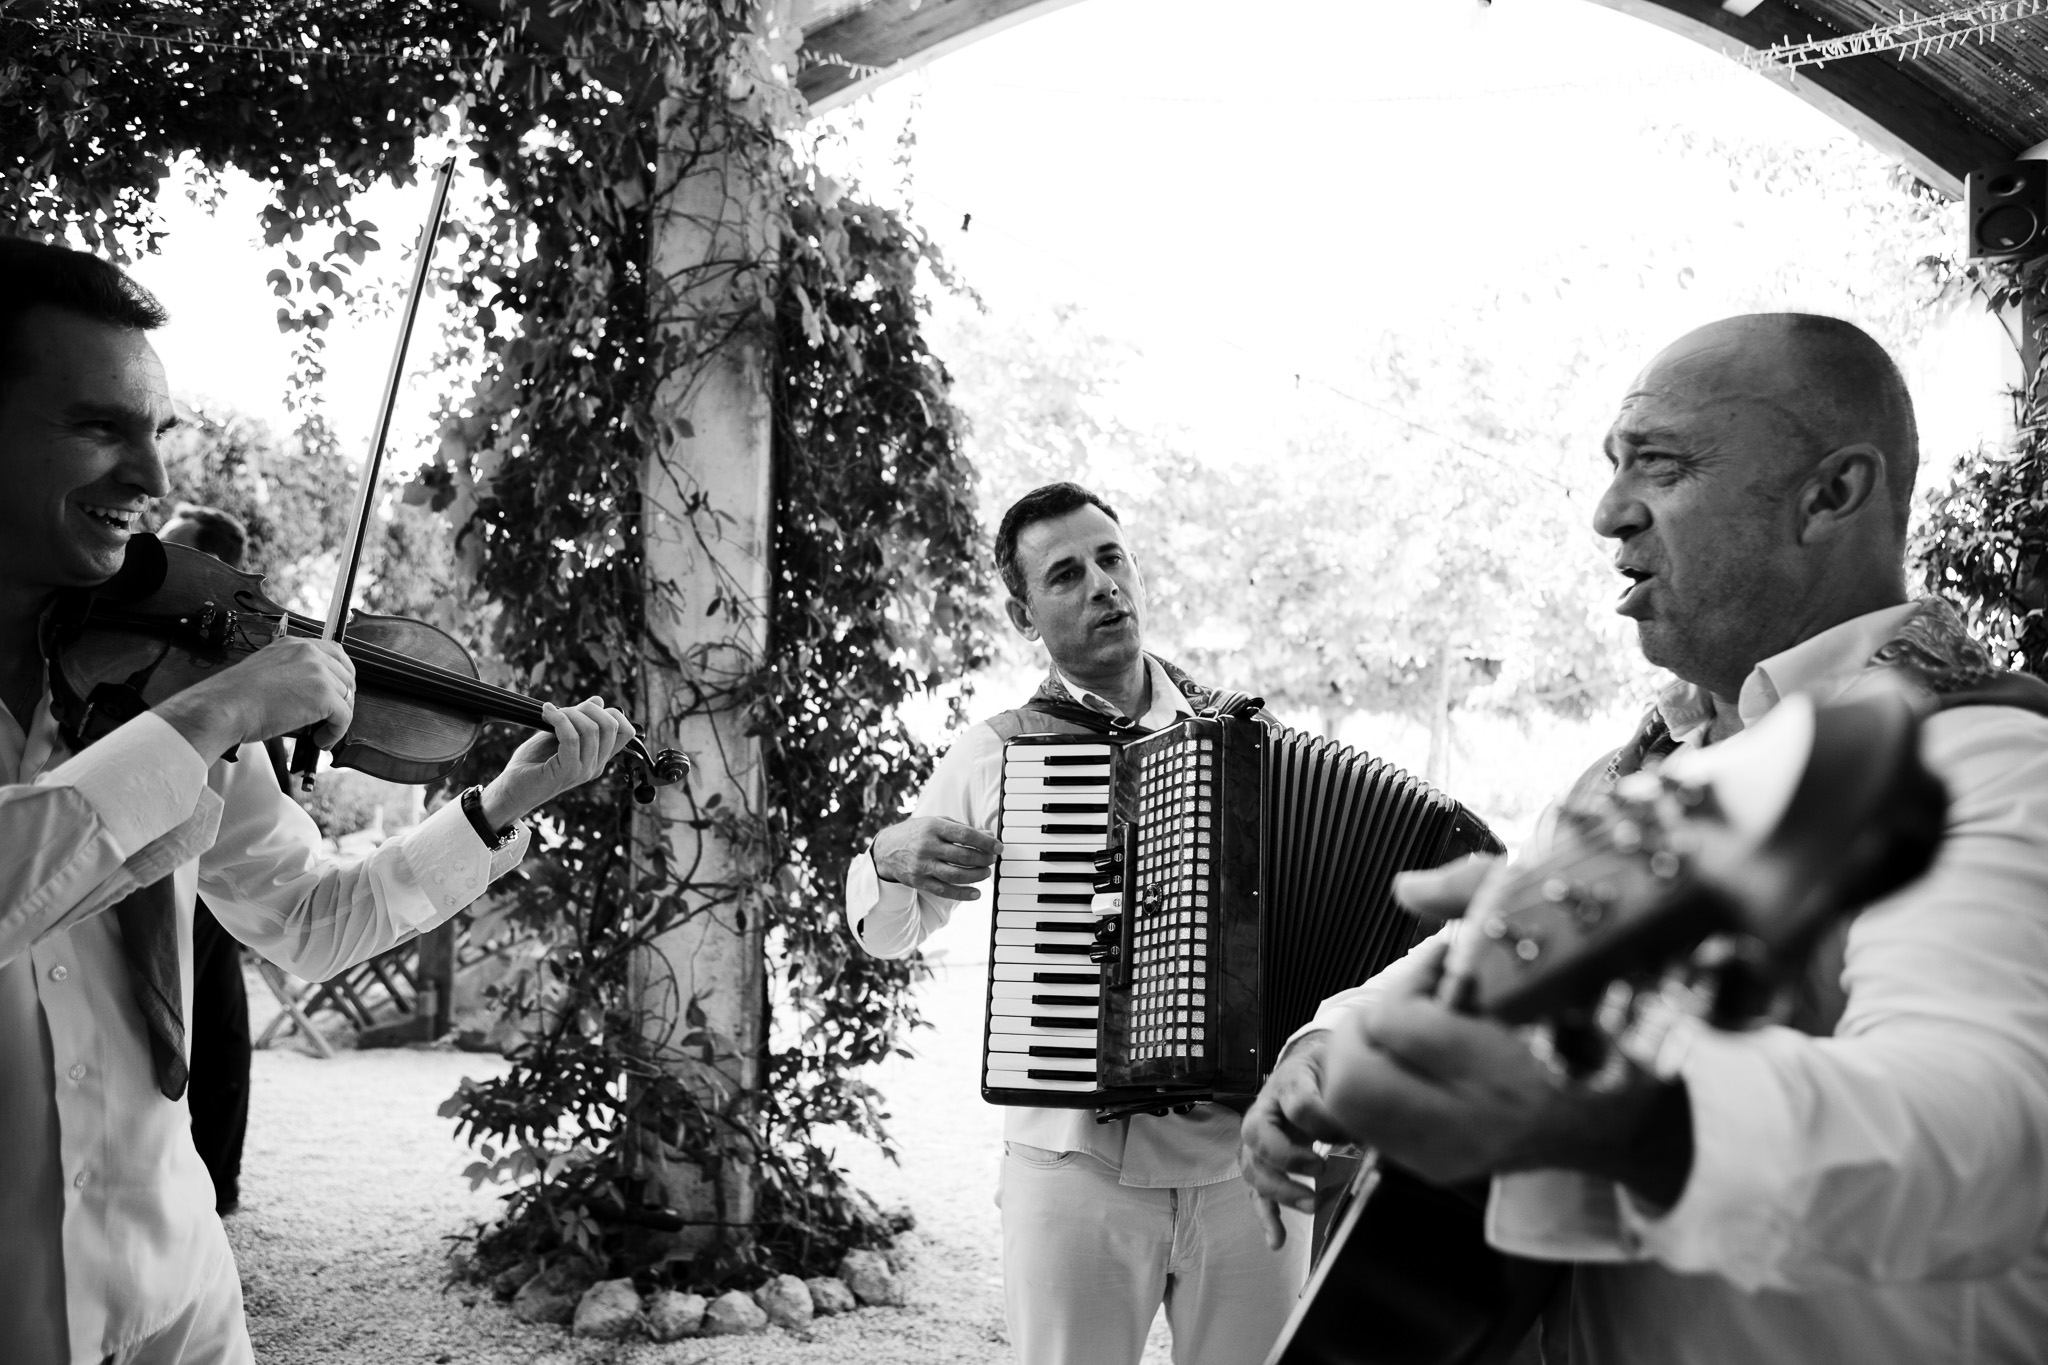 Alkinos Corfu Band playing at a wedding reception in Ambelonas Vineyard, Corfu